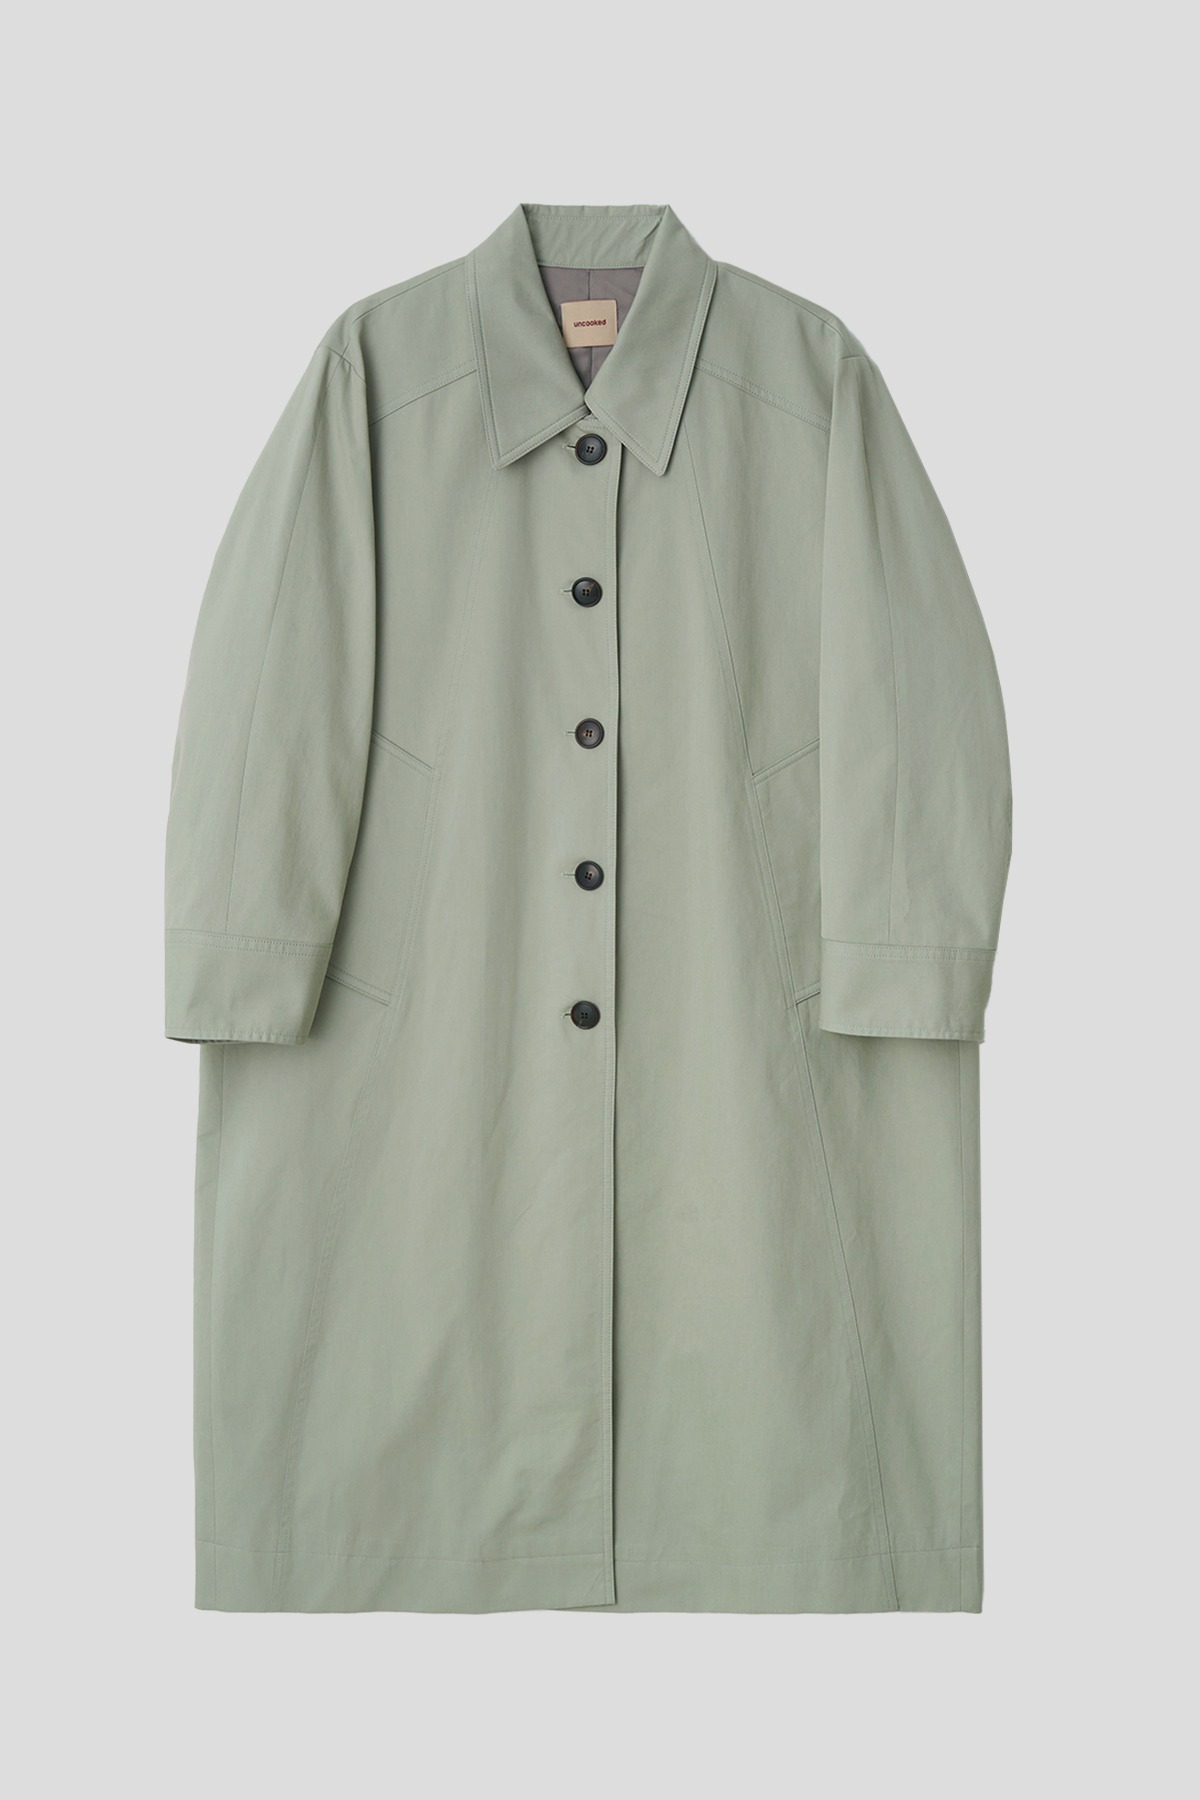 Classic over line trench coat(light khaki)